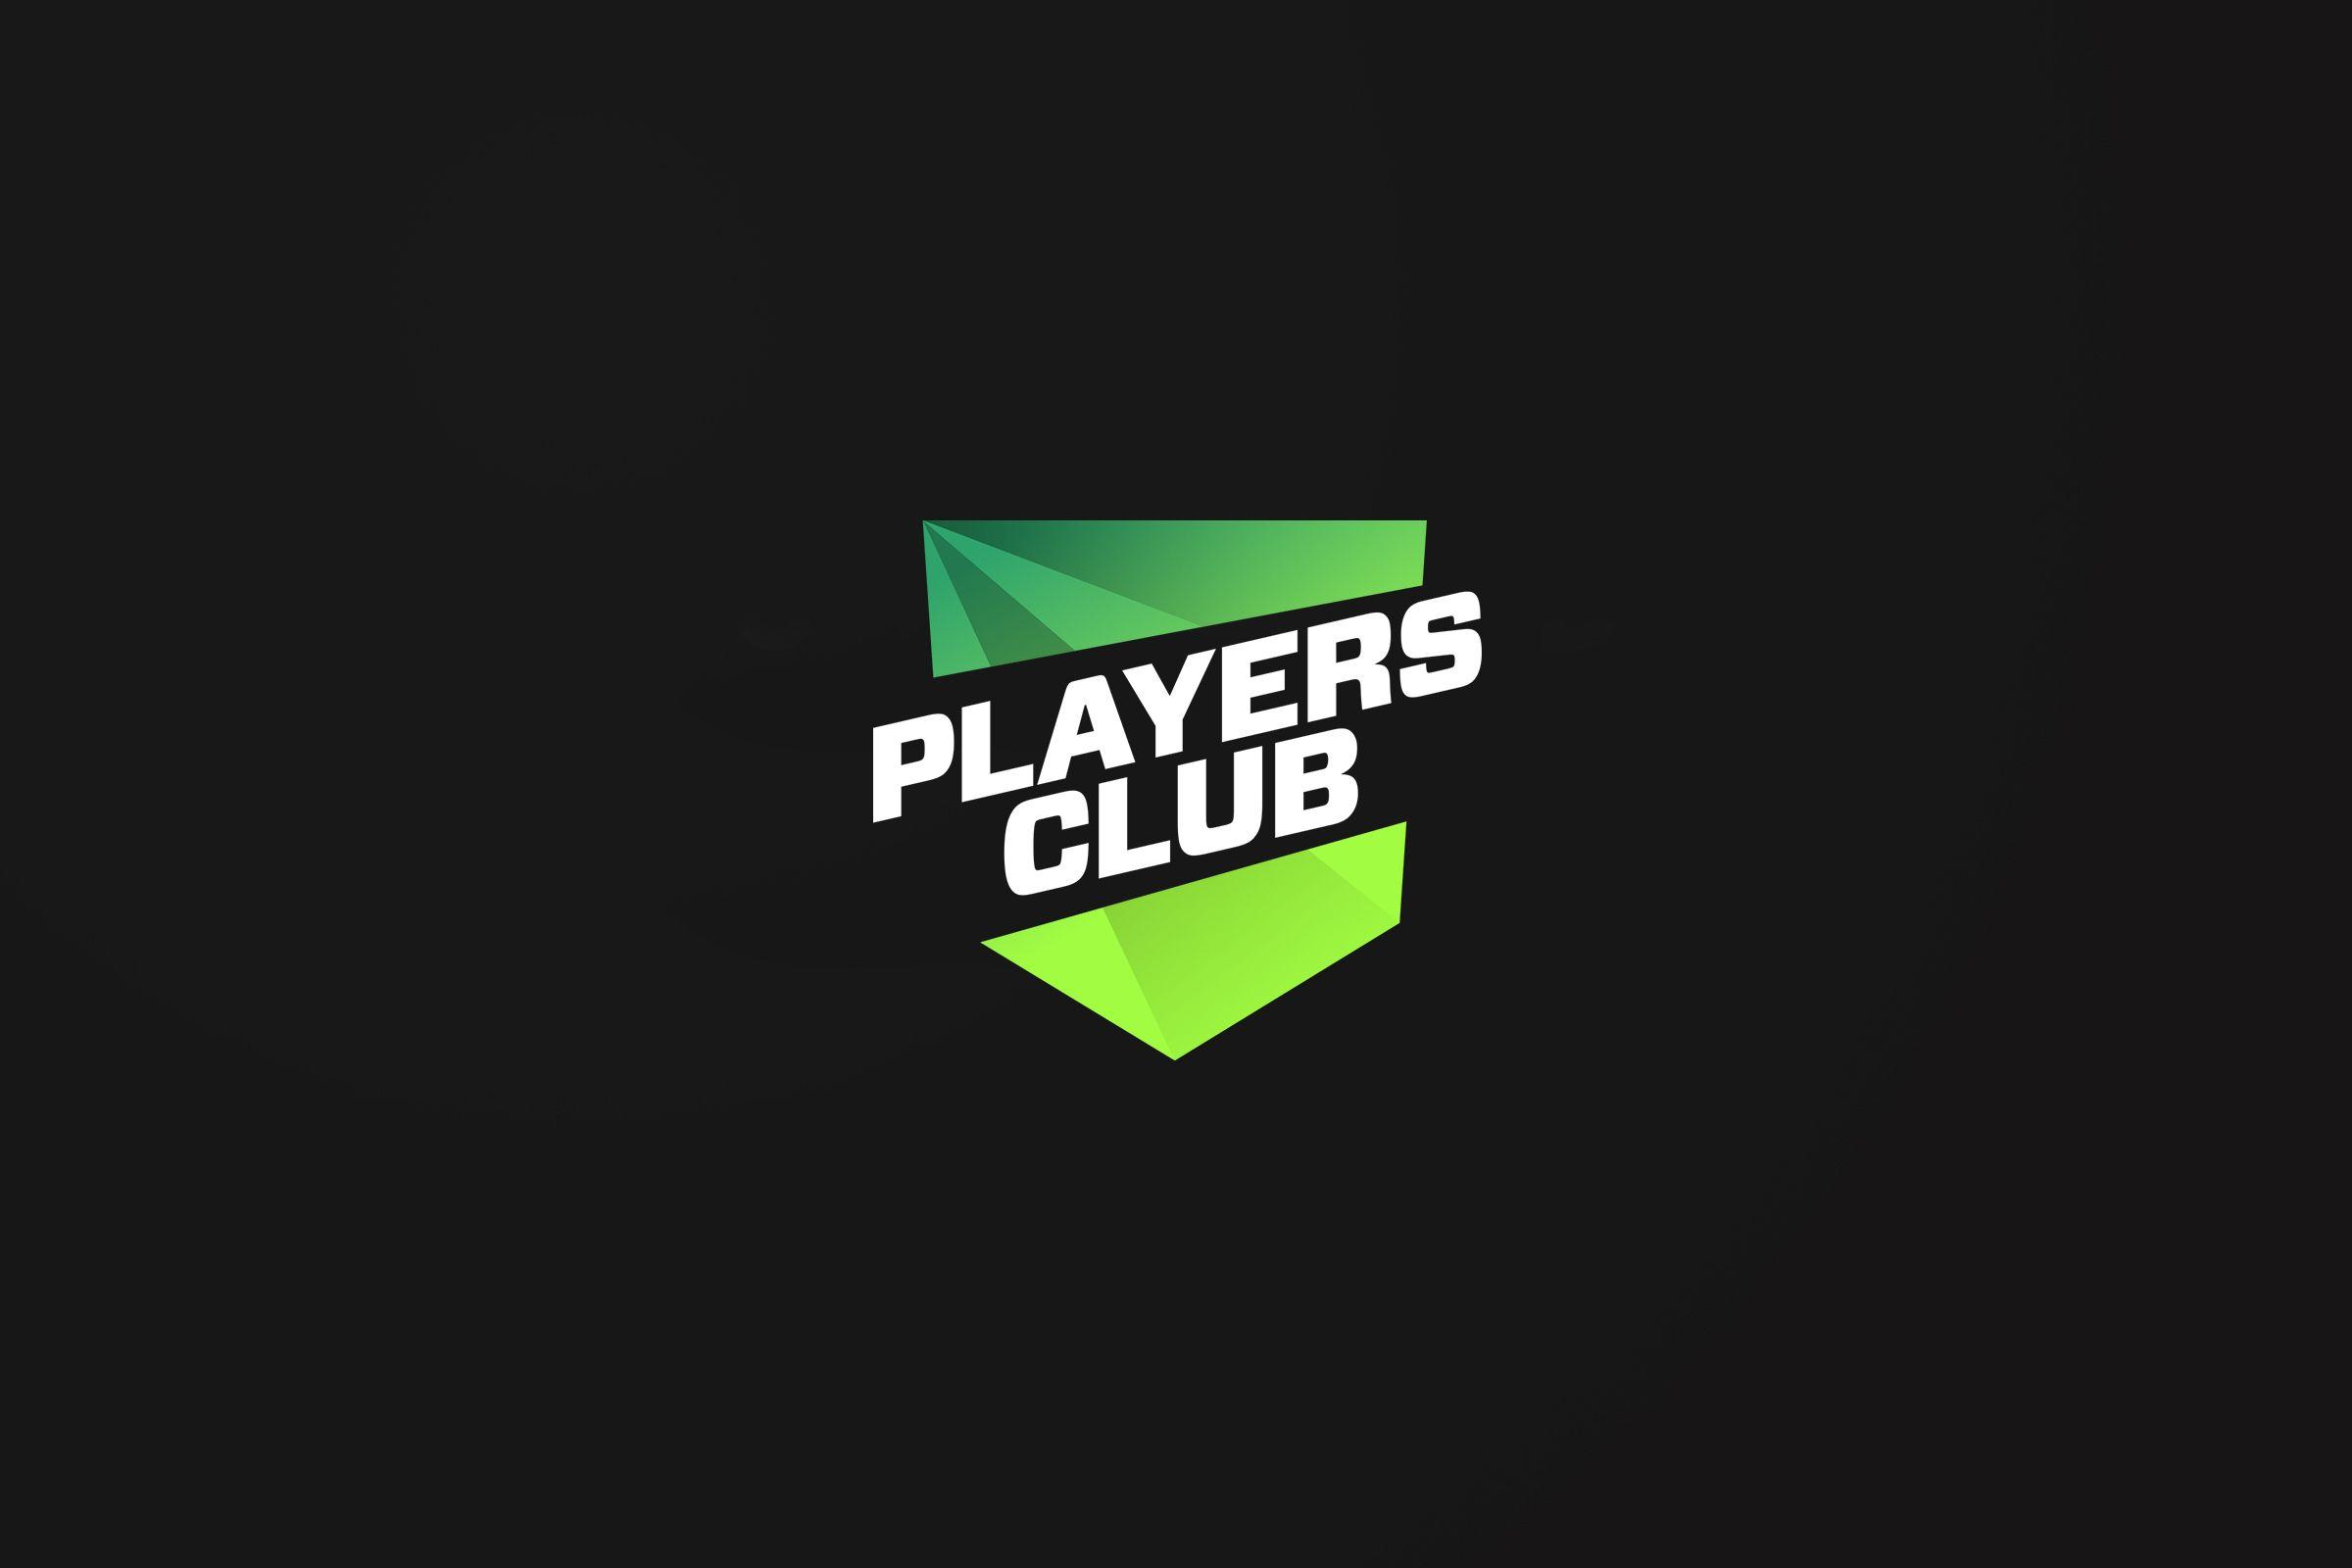 TaylorMade-adidas Logo - Players Club – TaylorMade Adidas – Mark Etherington